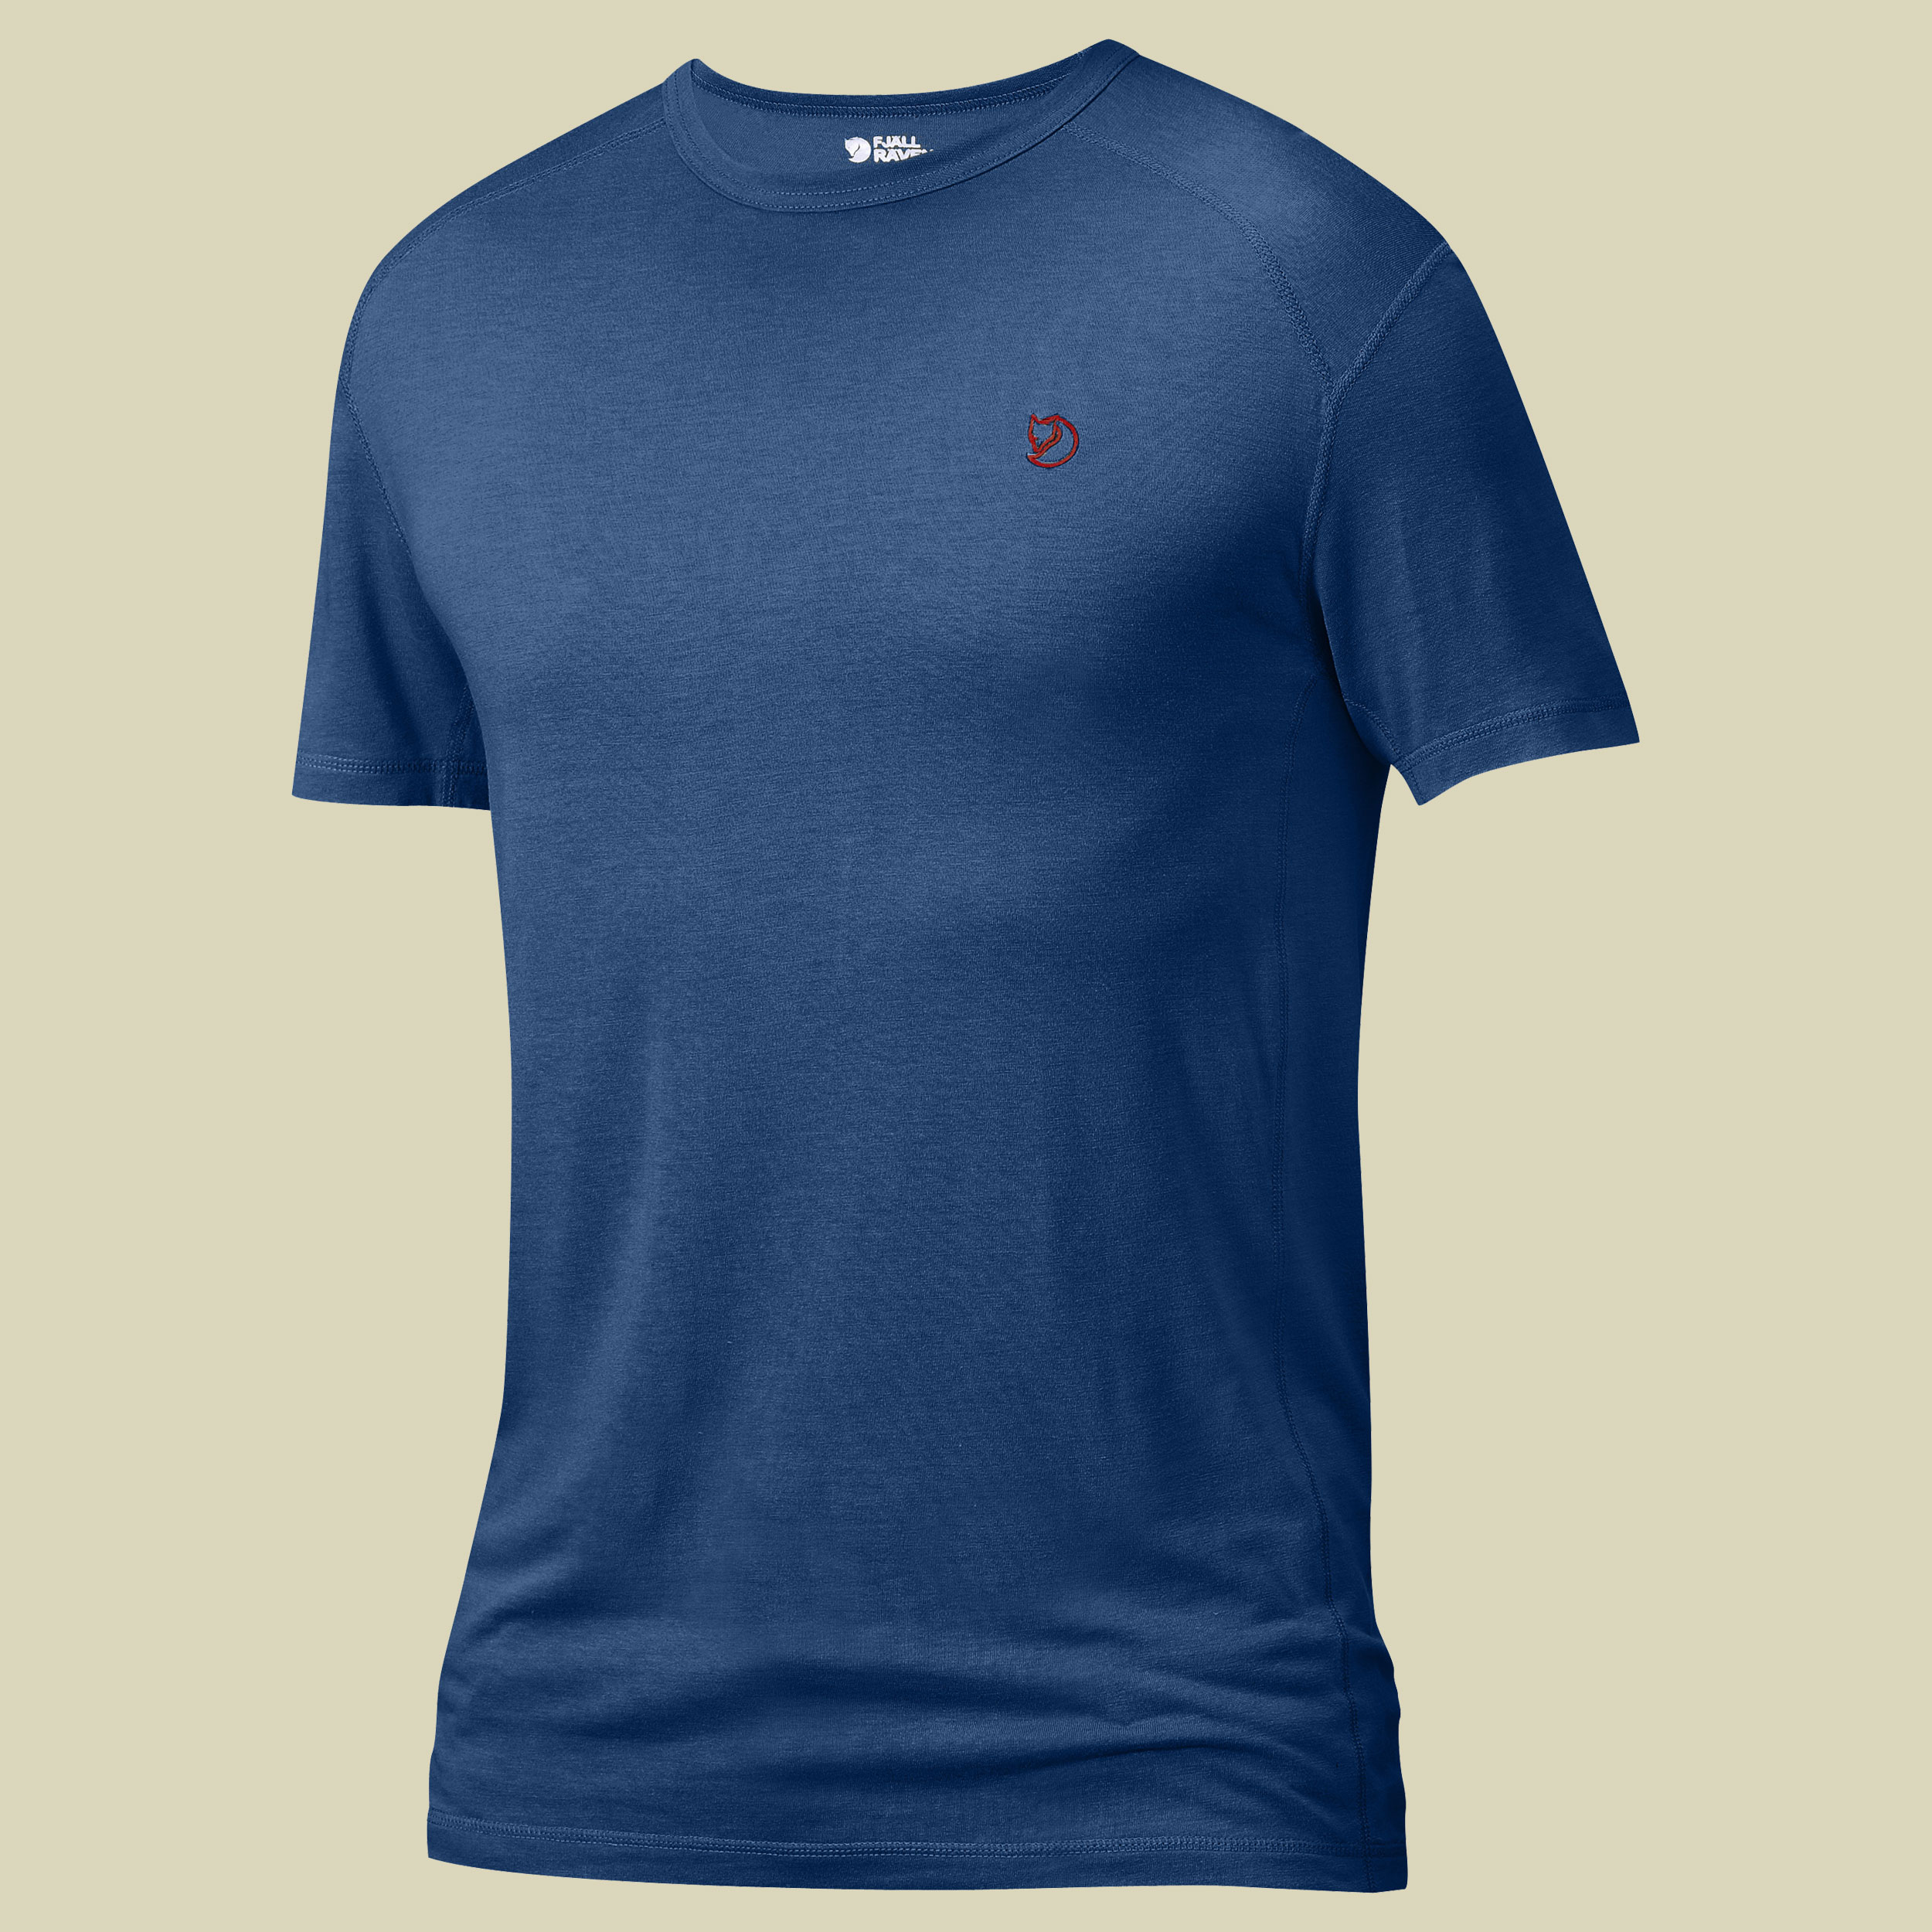 Mard T-Shirt Men Größe S Farbe uncle blue